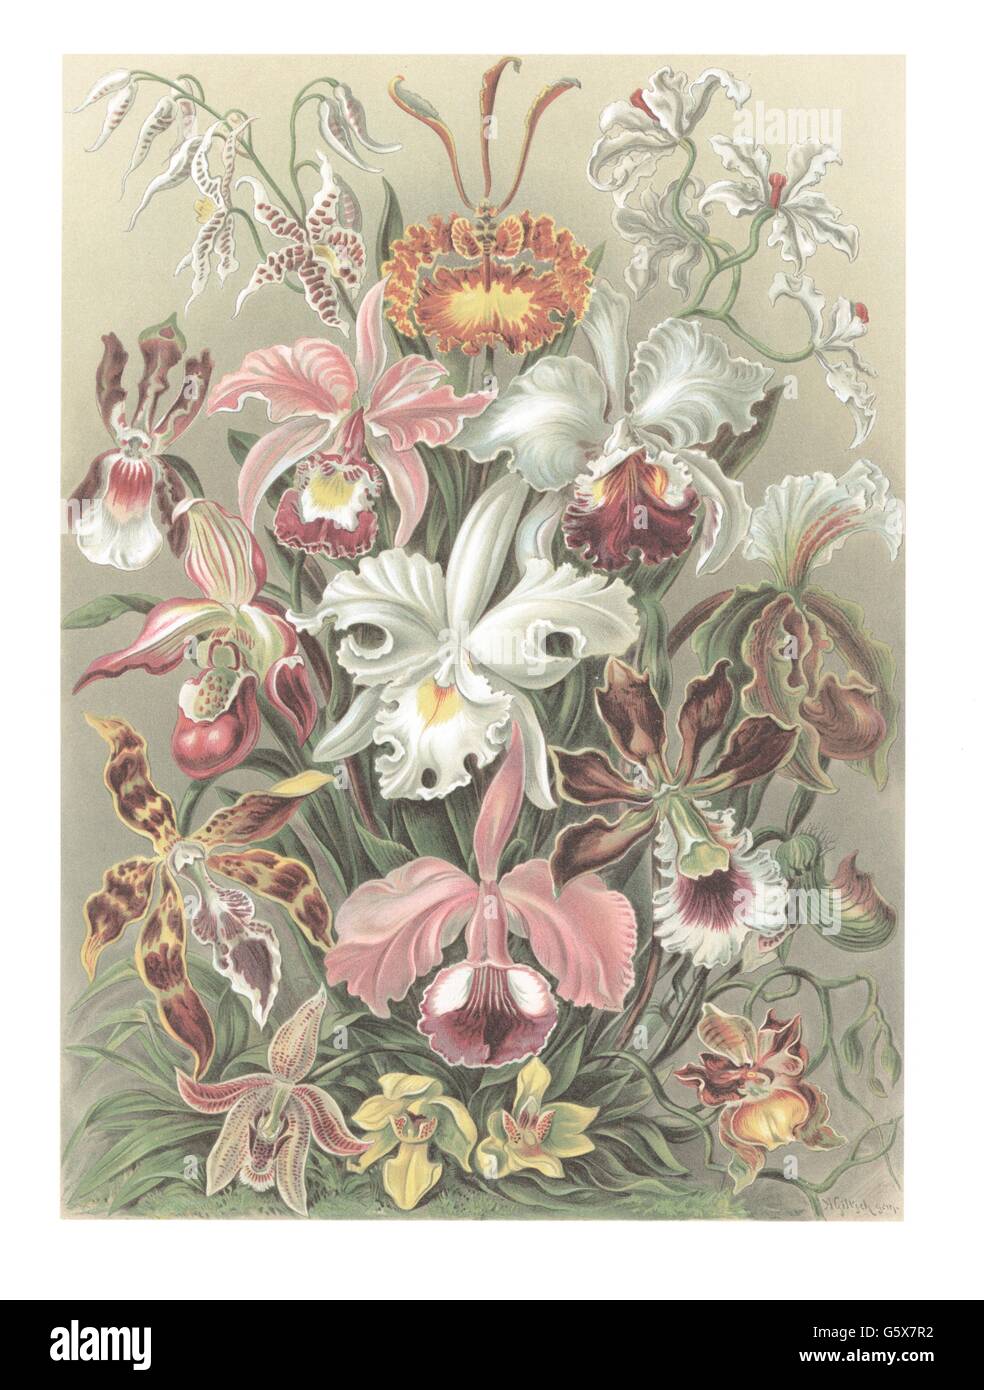 botanik, Asparagales, Orchideen (Orchidaceae), Farblithographie, aus: Ernst Haeckel, 'Kunstformen der Natur', Leipzig - Wien, 1899 - 1904, Additional-Rights-Clearences-not available Stockfoto